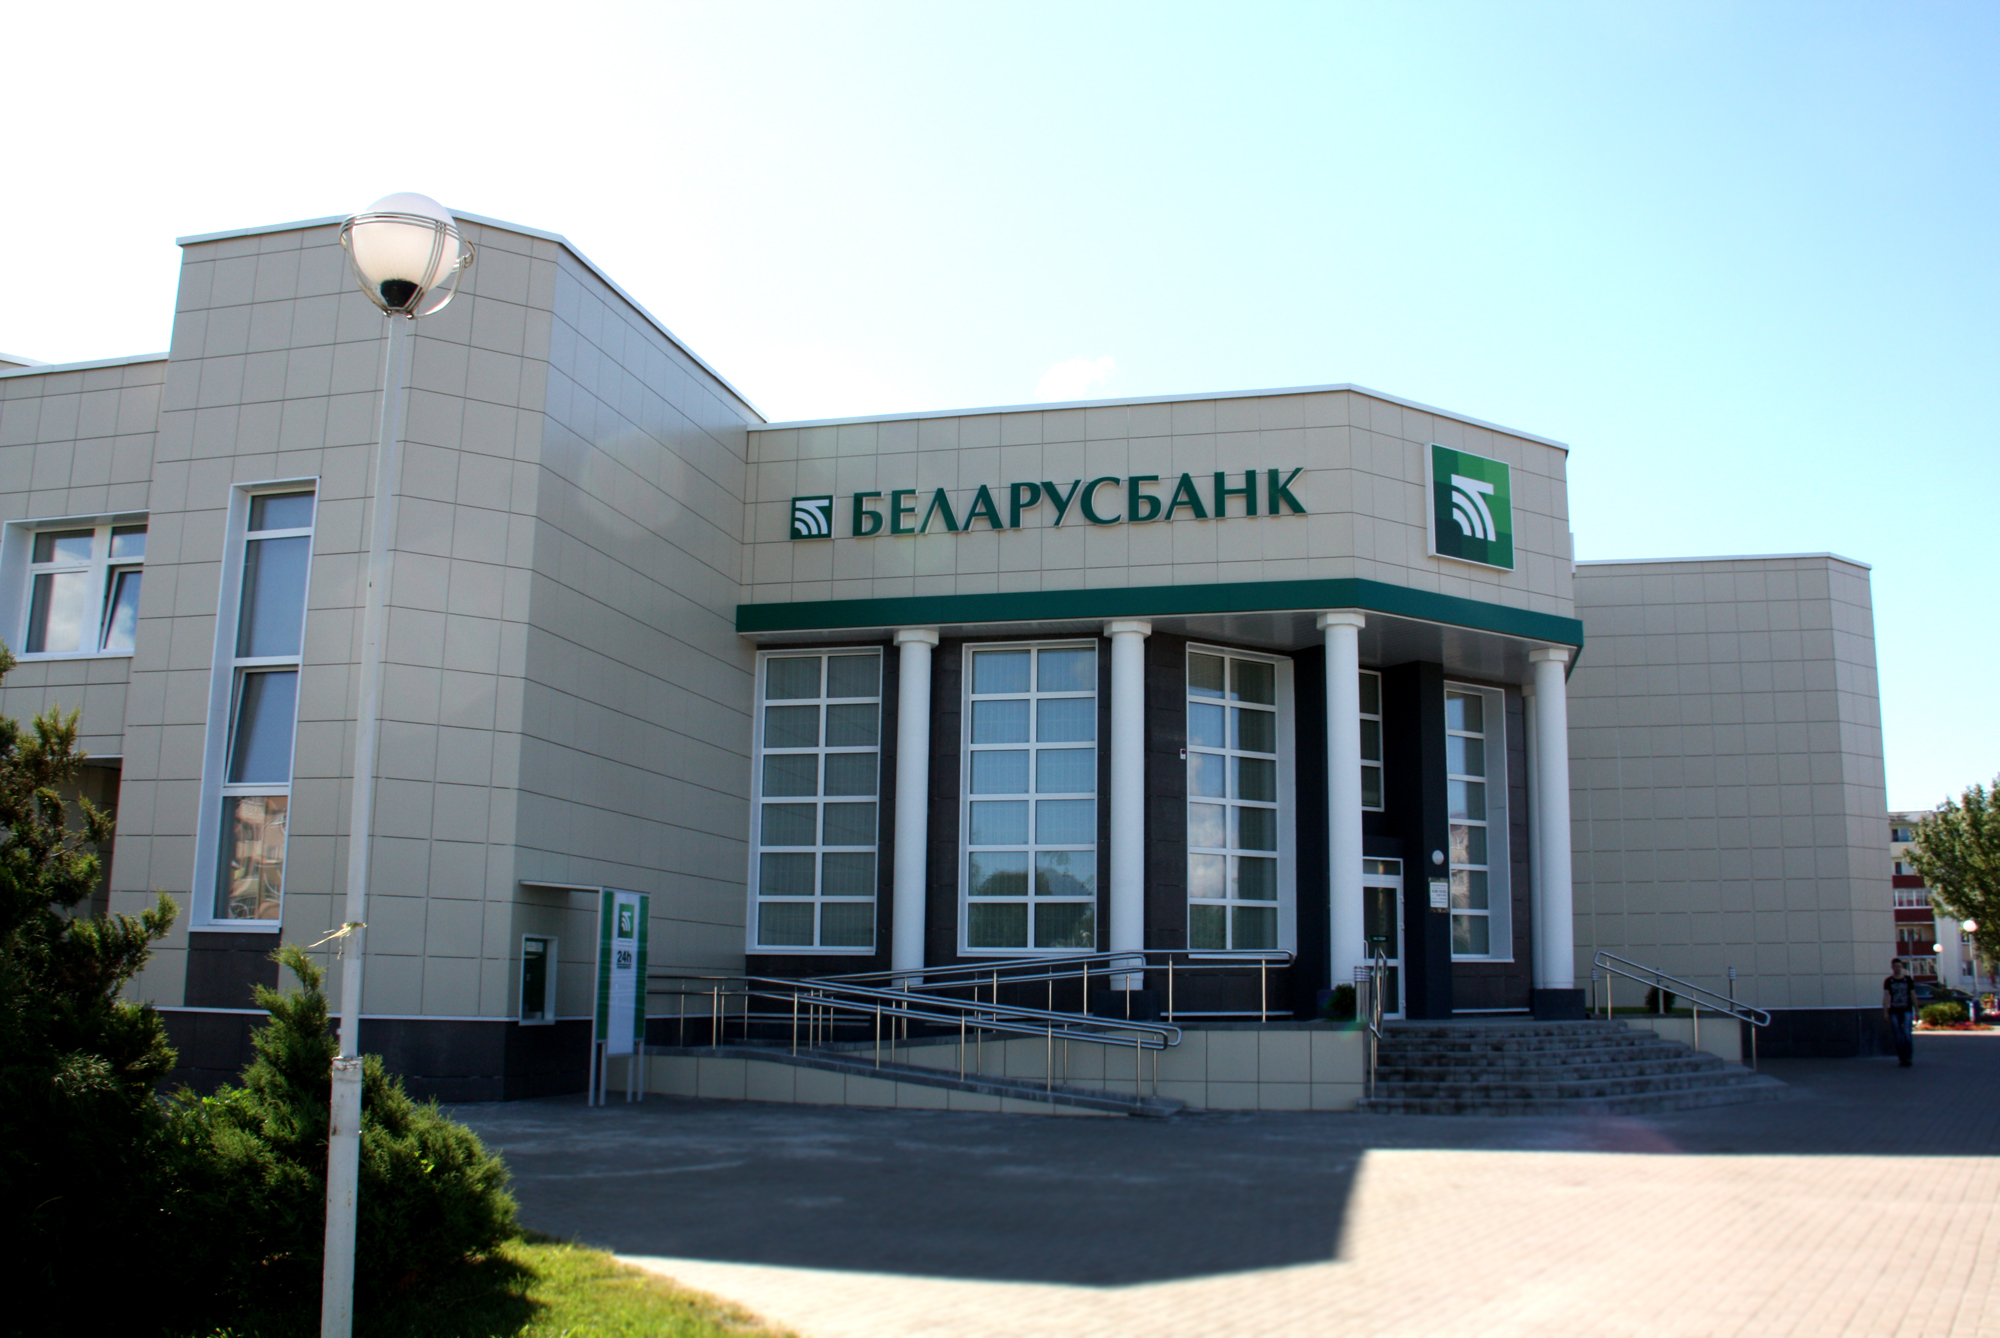 Беларусбанк банкомат рядом. Банк Белоруссии. Беларусбанк. Белорусские банки. Беларусбанк банк.